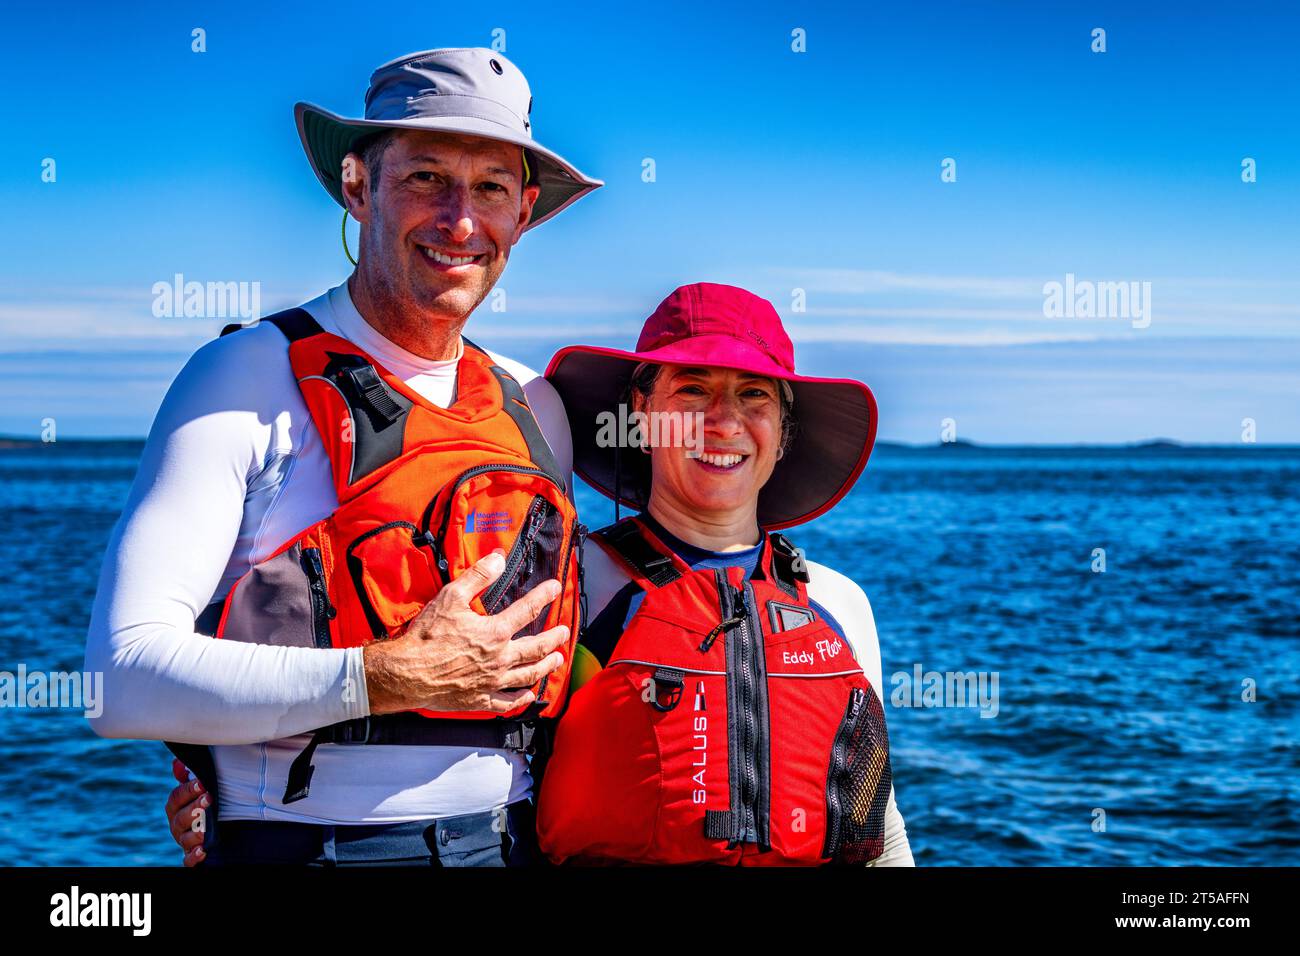 Portrait of a kayaking couple, Porvoo, Finland Stock Photo